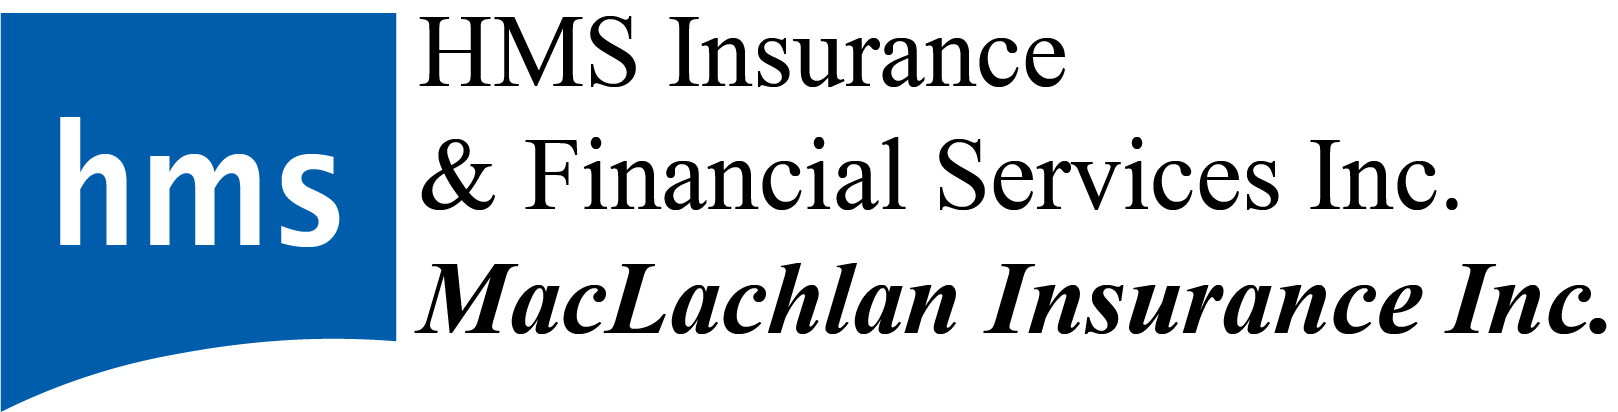 HMS Insurance & Financial Services